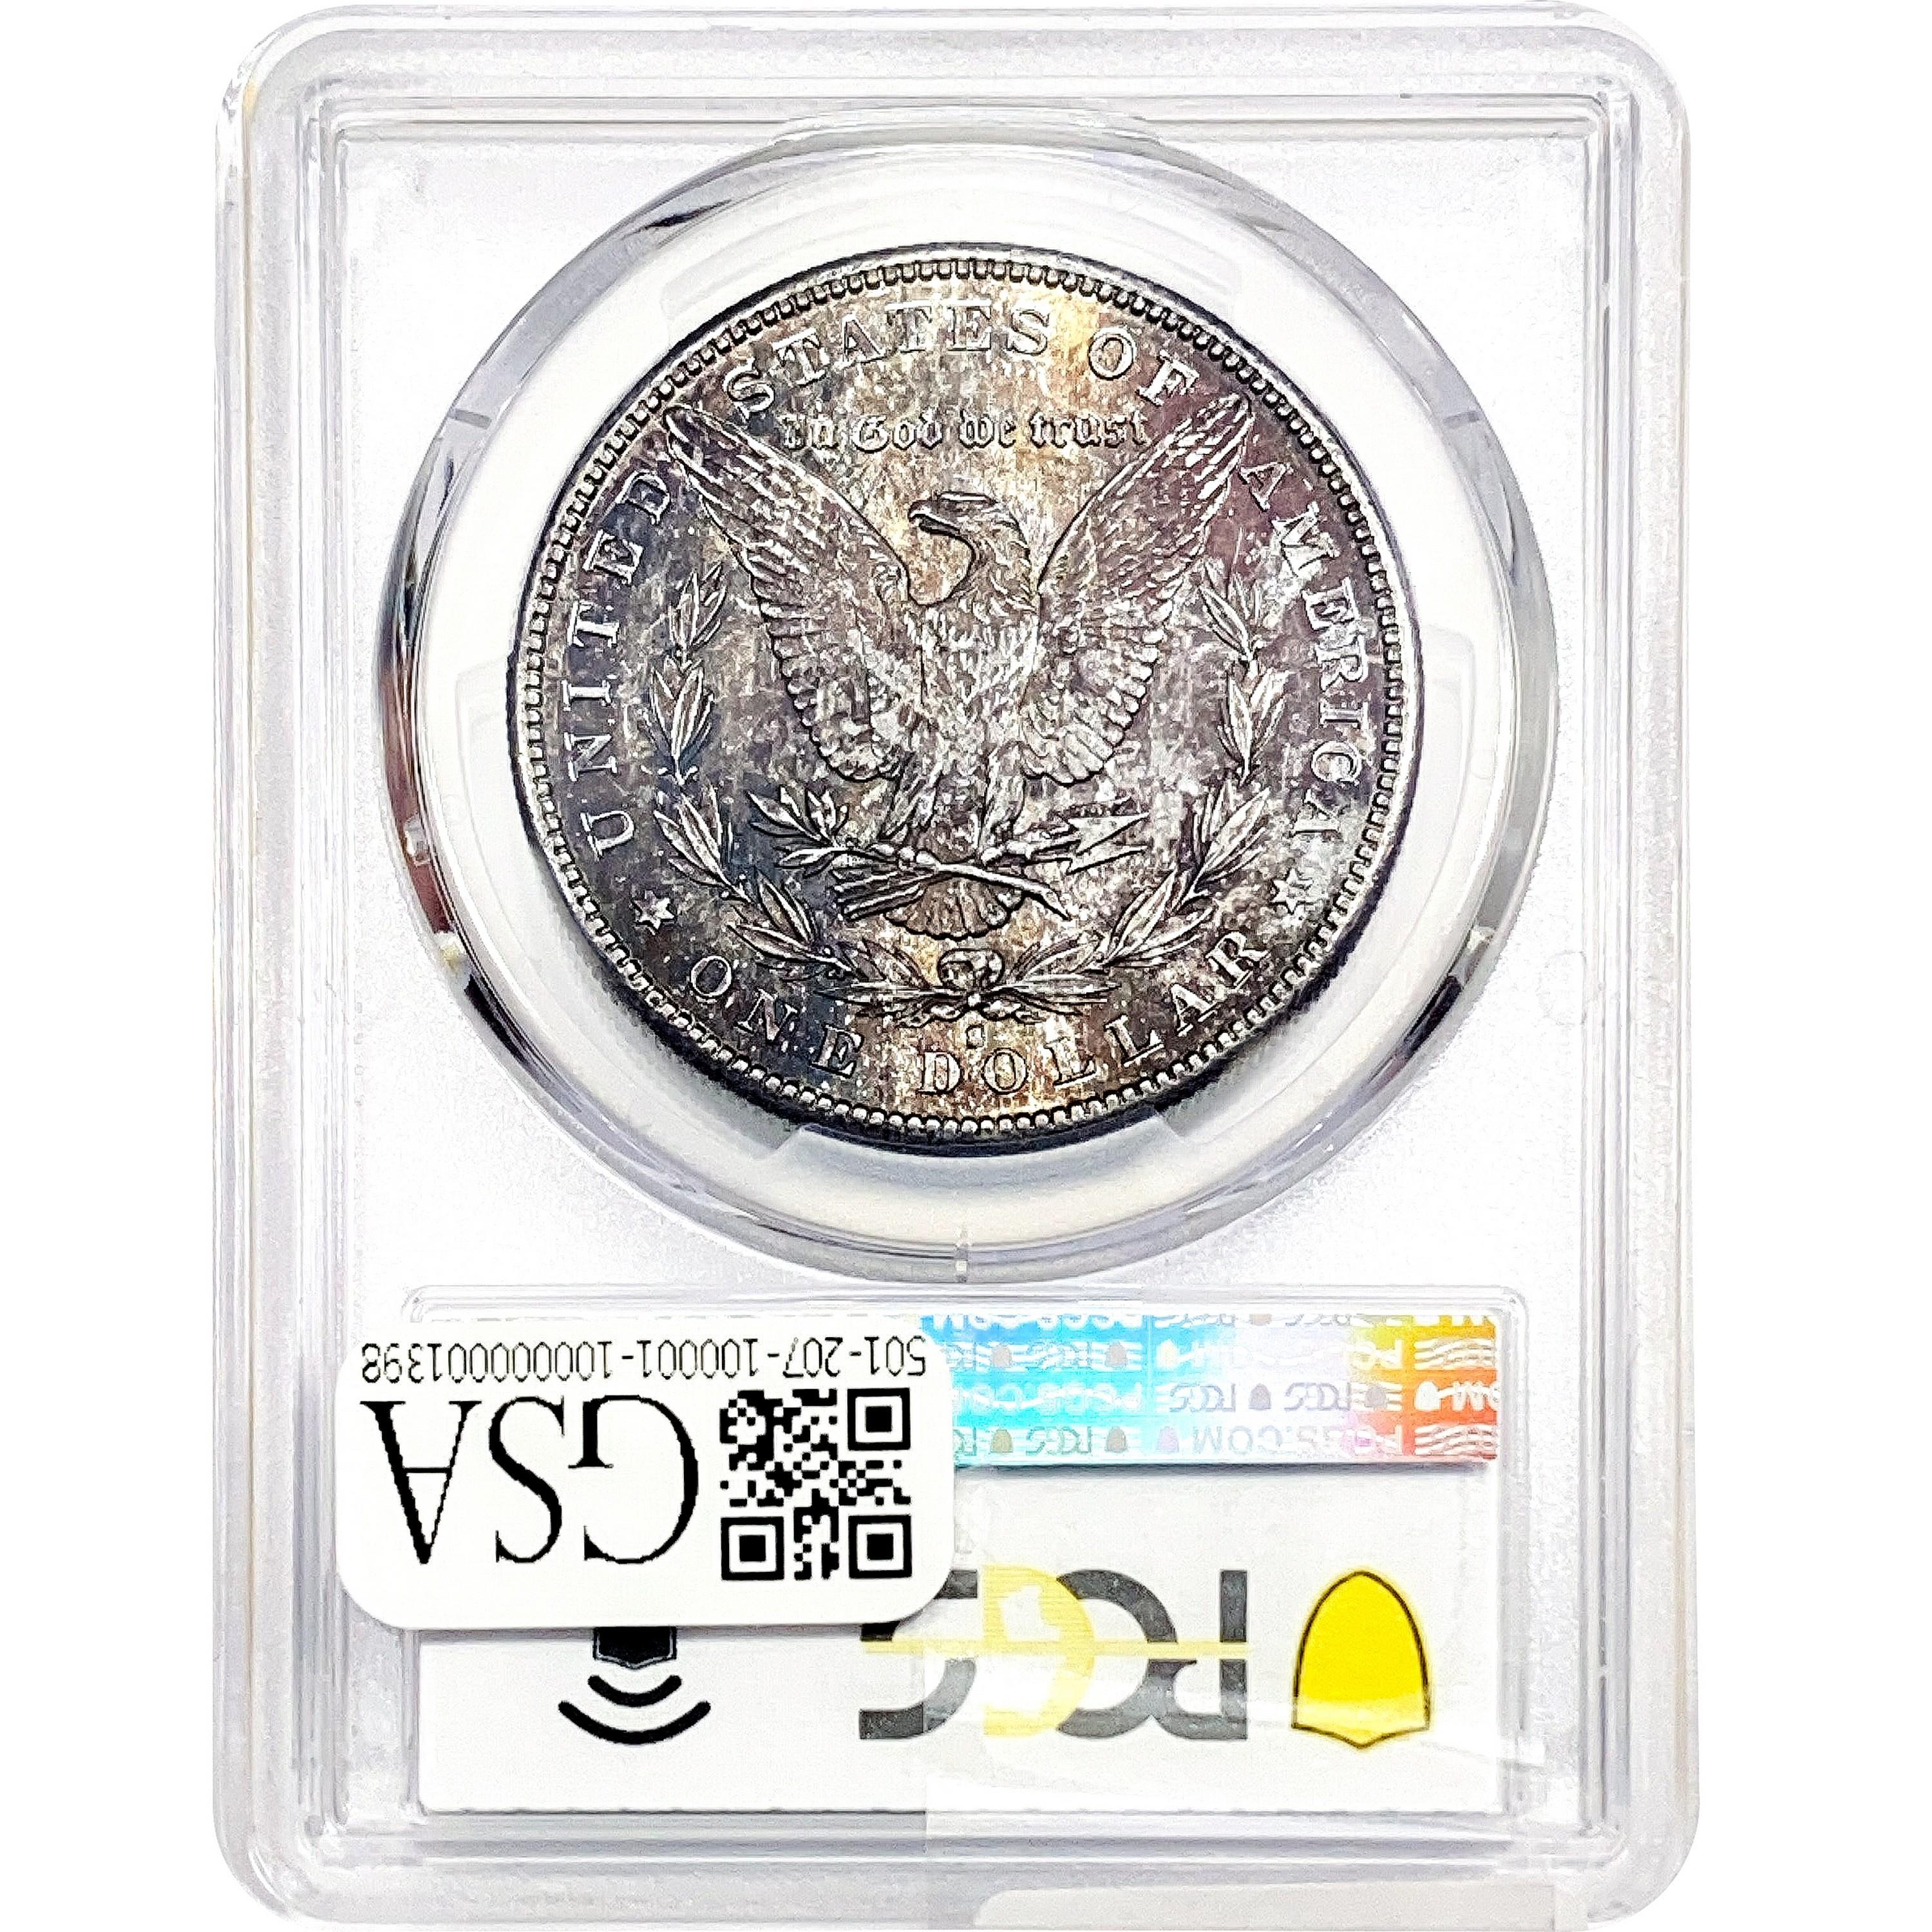 1889-S Morgan Silver Dollar PCGS MS62